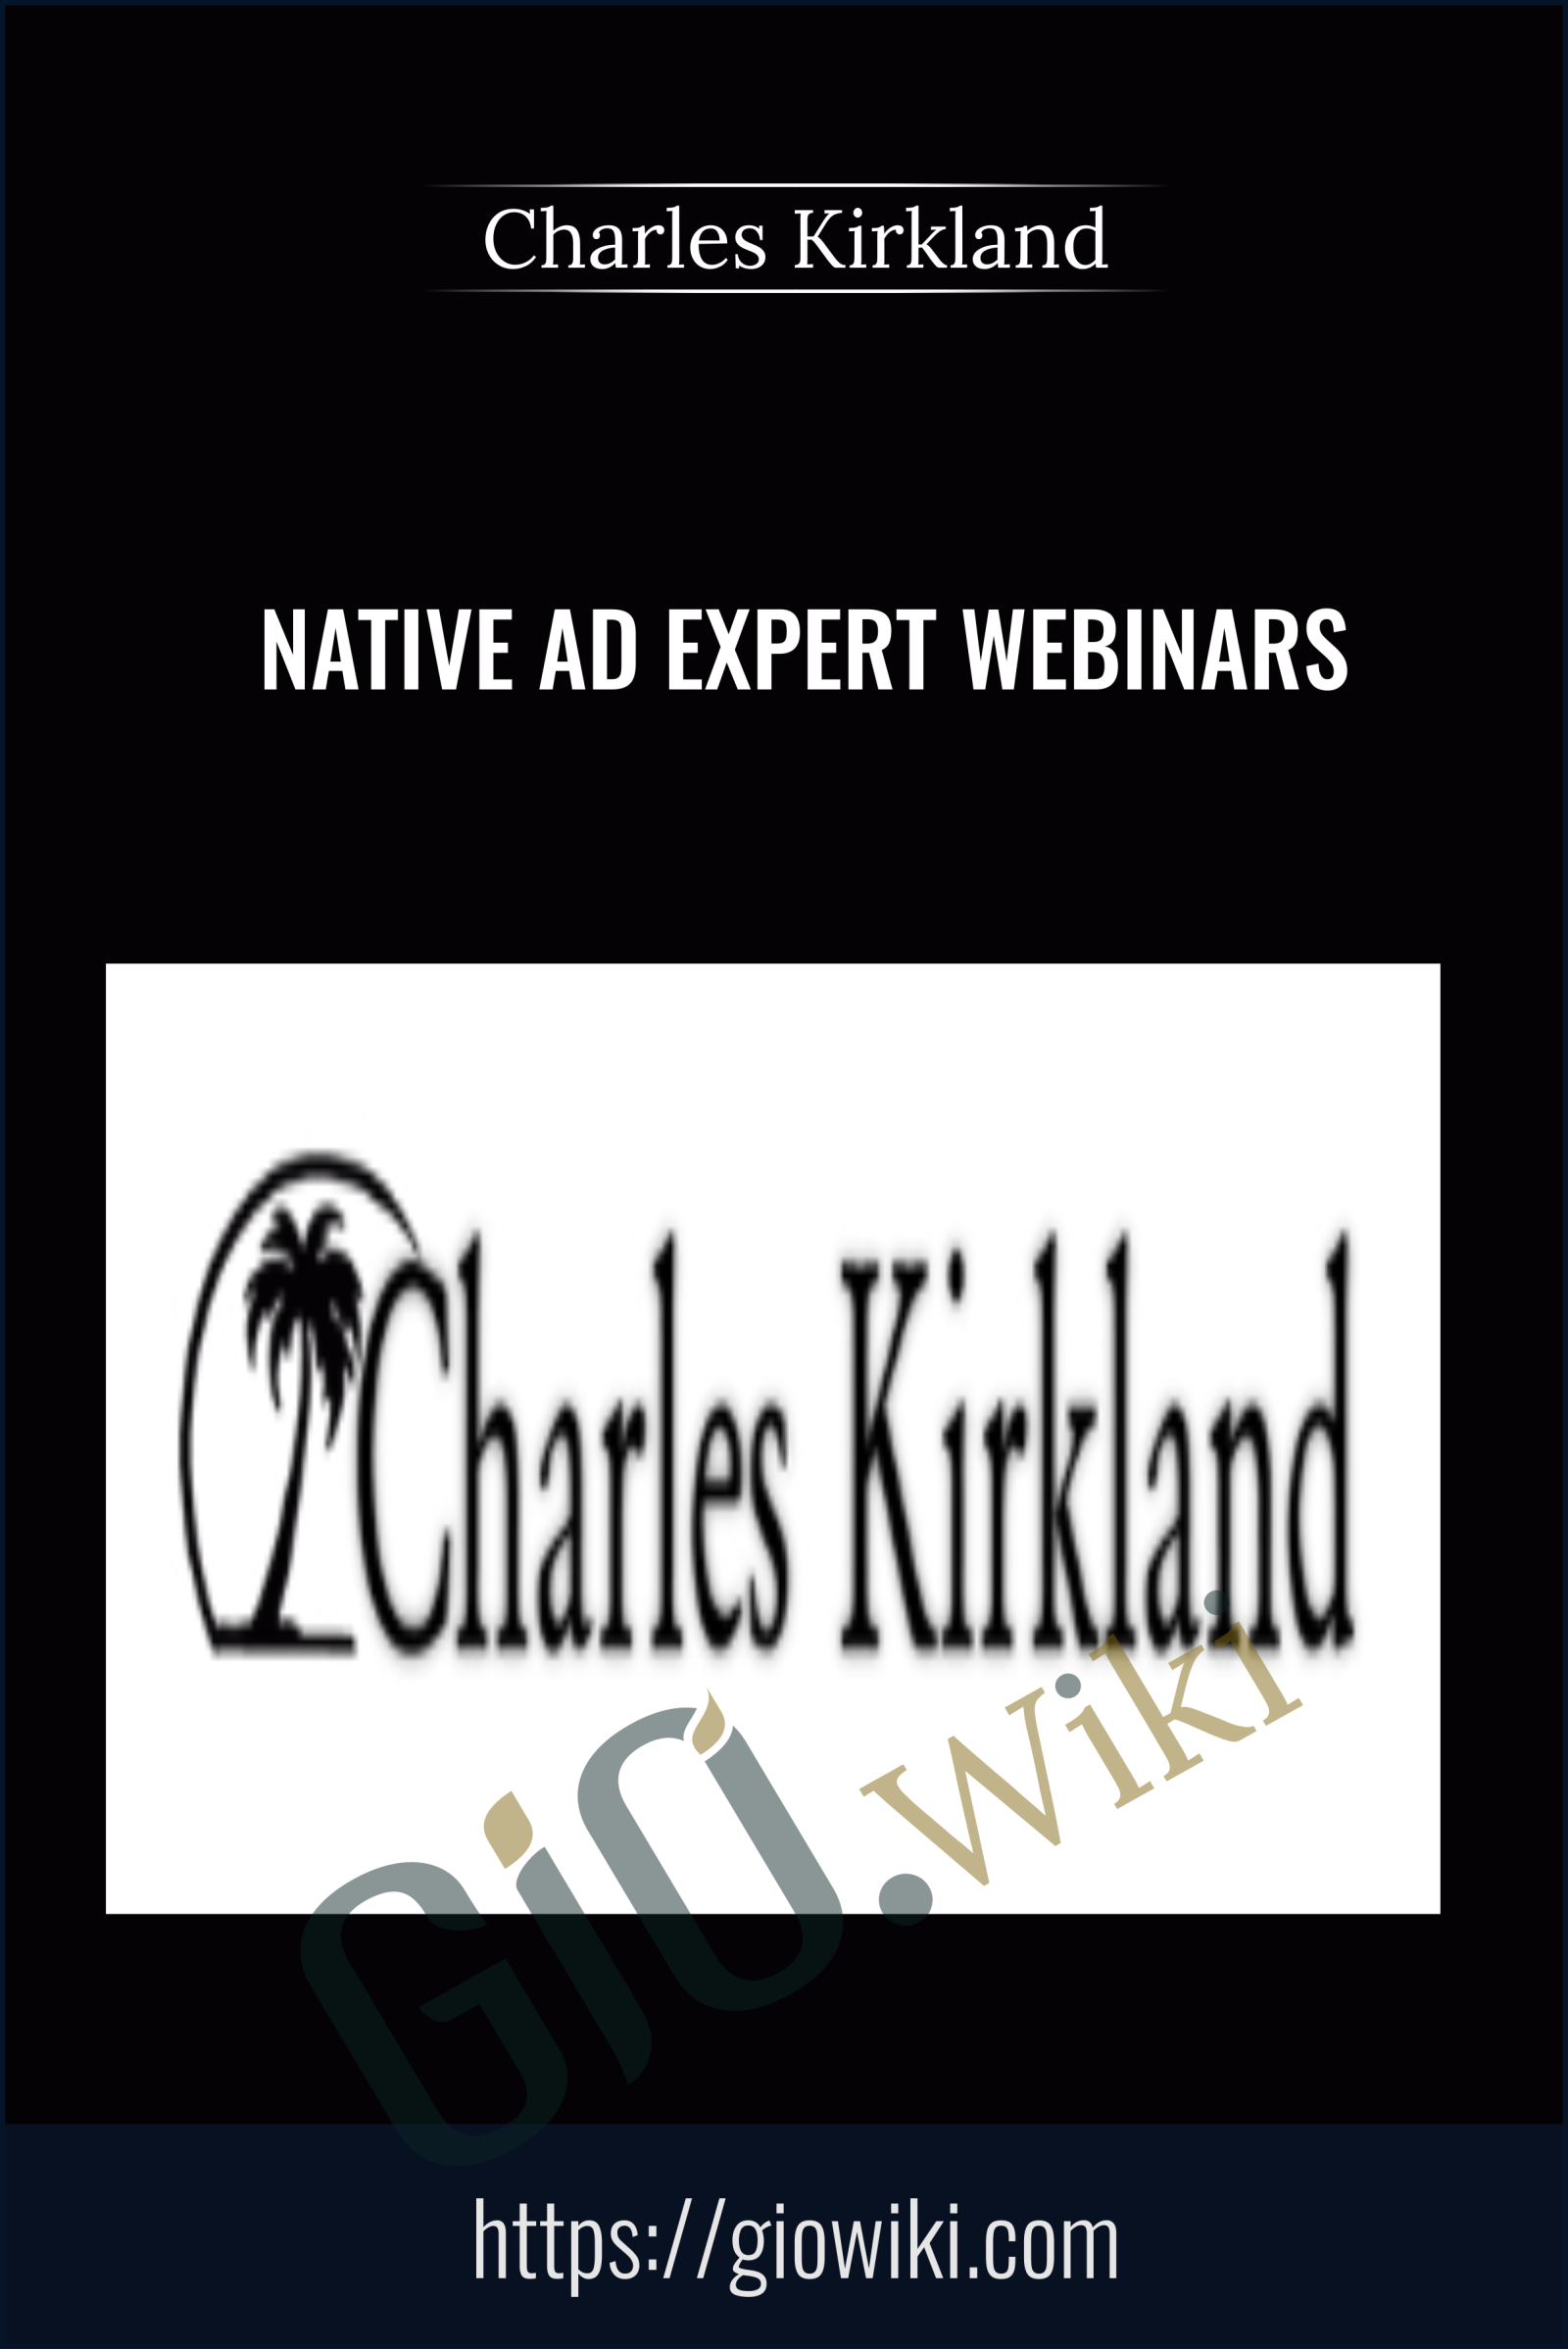 Native Ad expert WEBINARS - Charles Kirkland